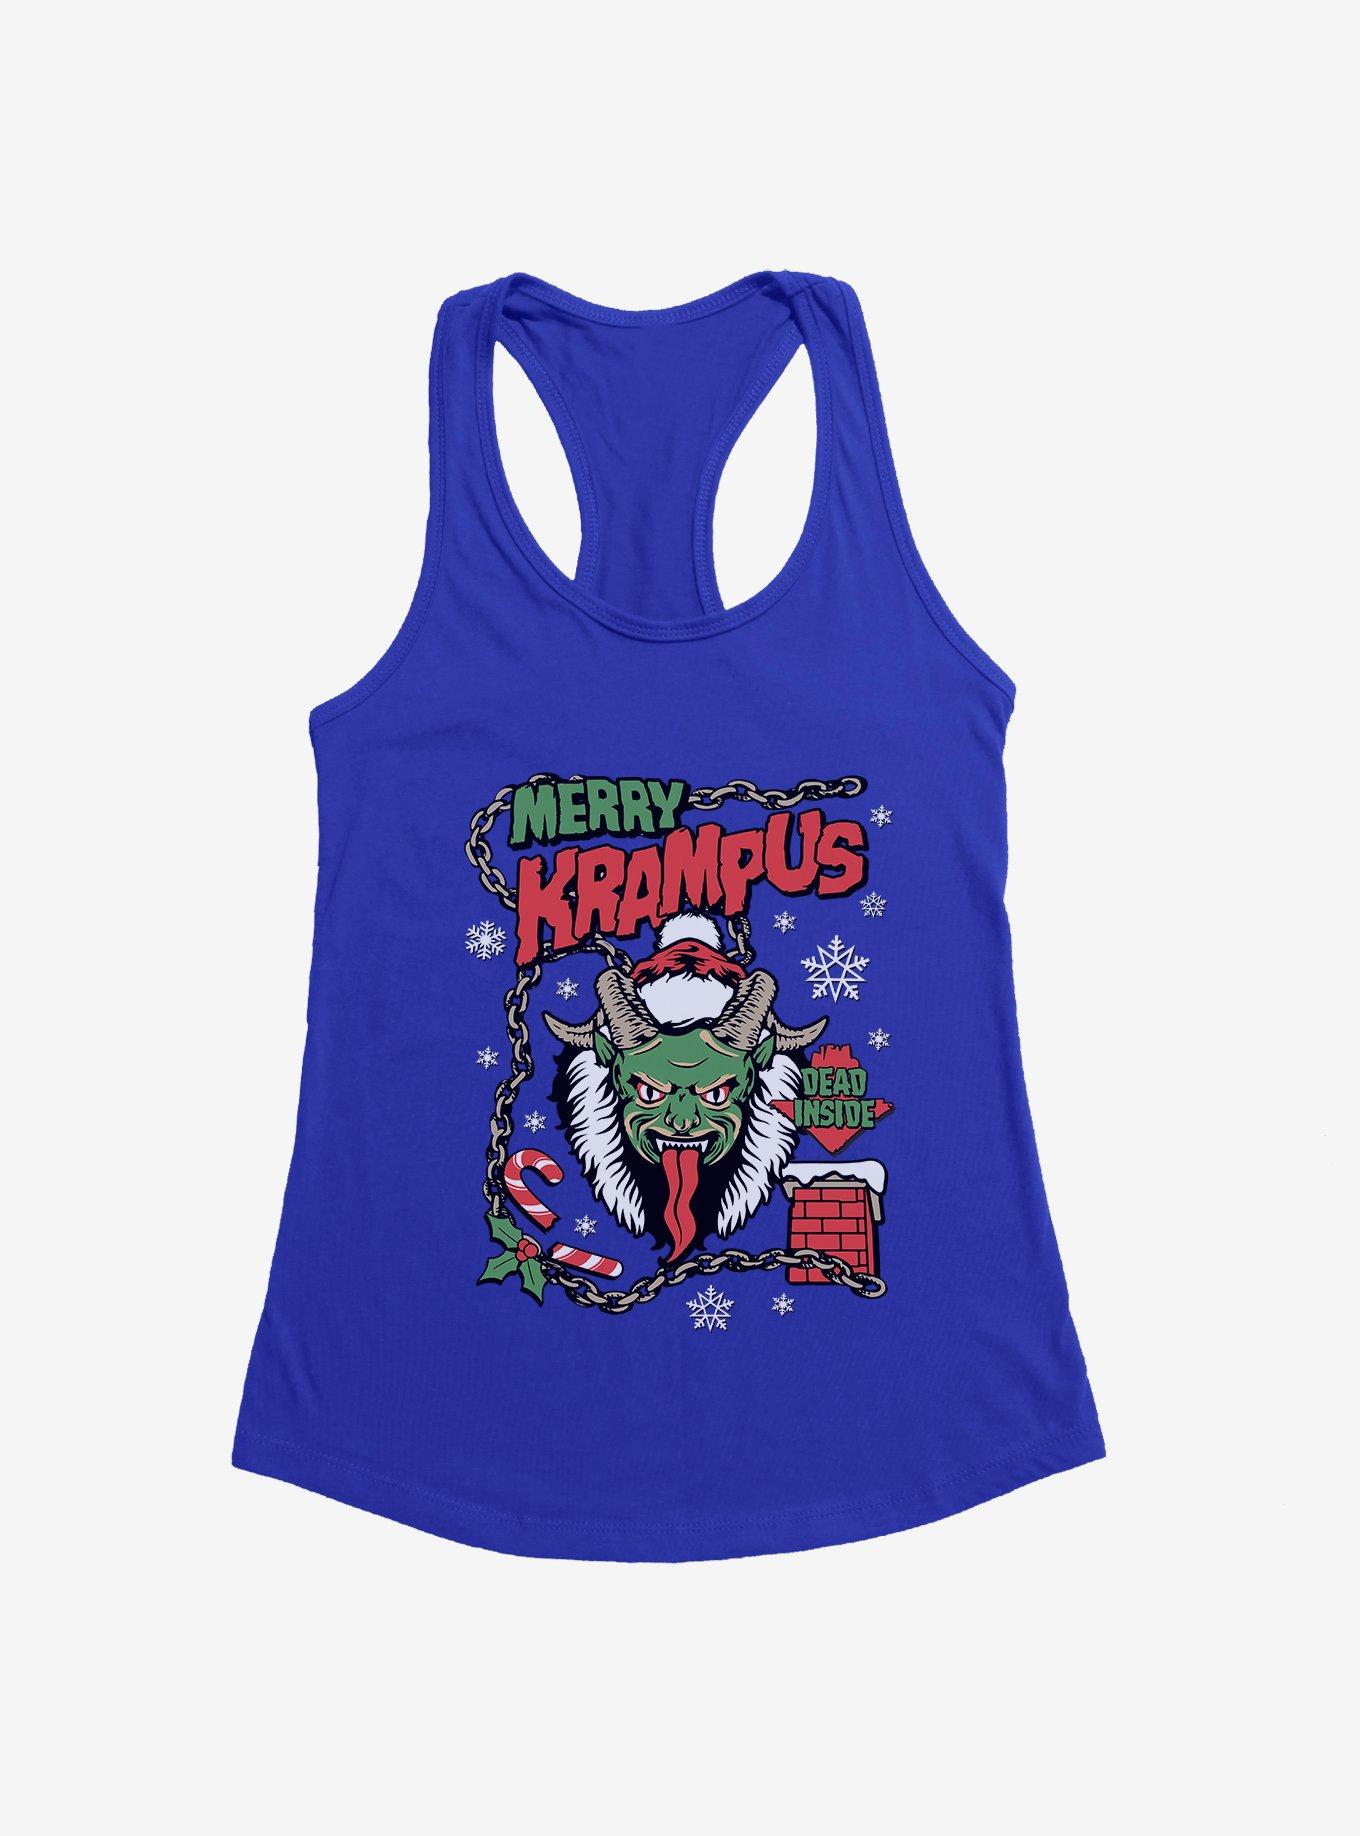 Merry Krampus Dead Inside Girls Tank, , hi-res